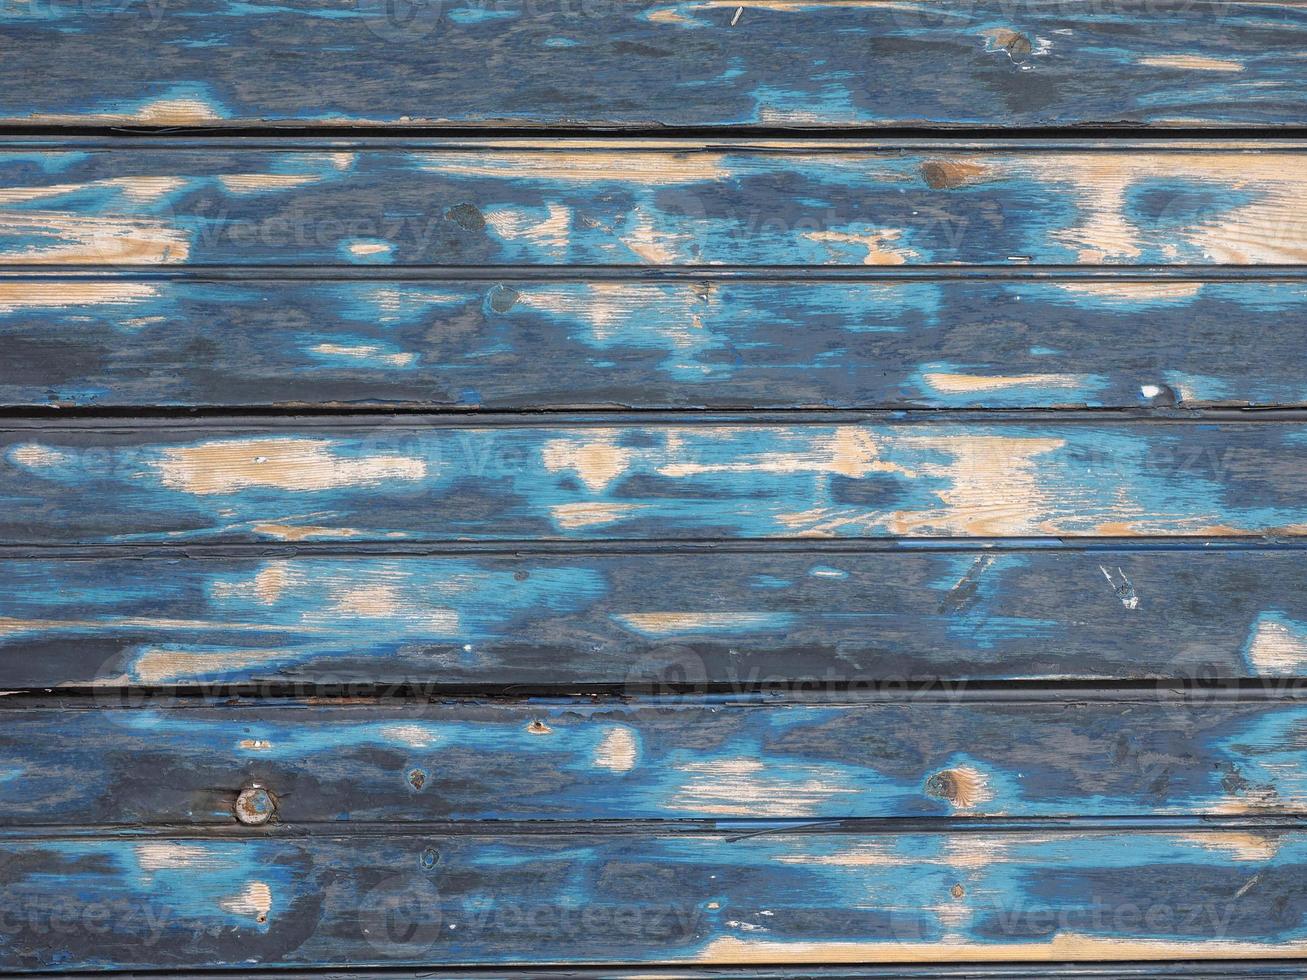 blue wood texture background photo